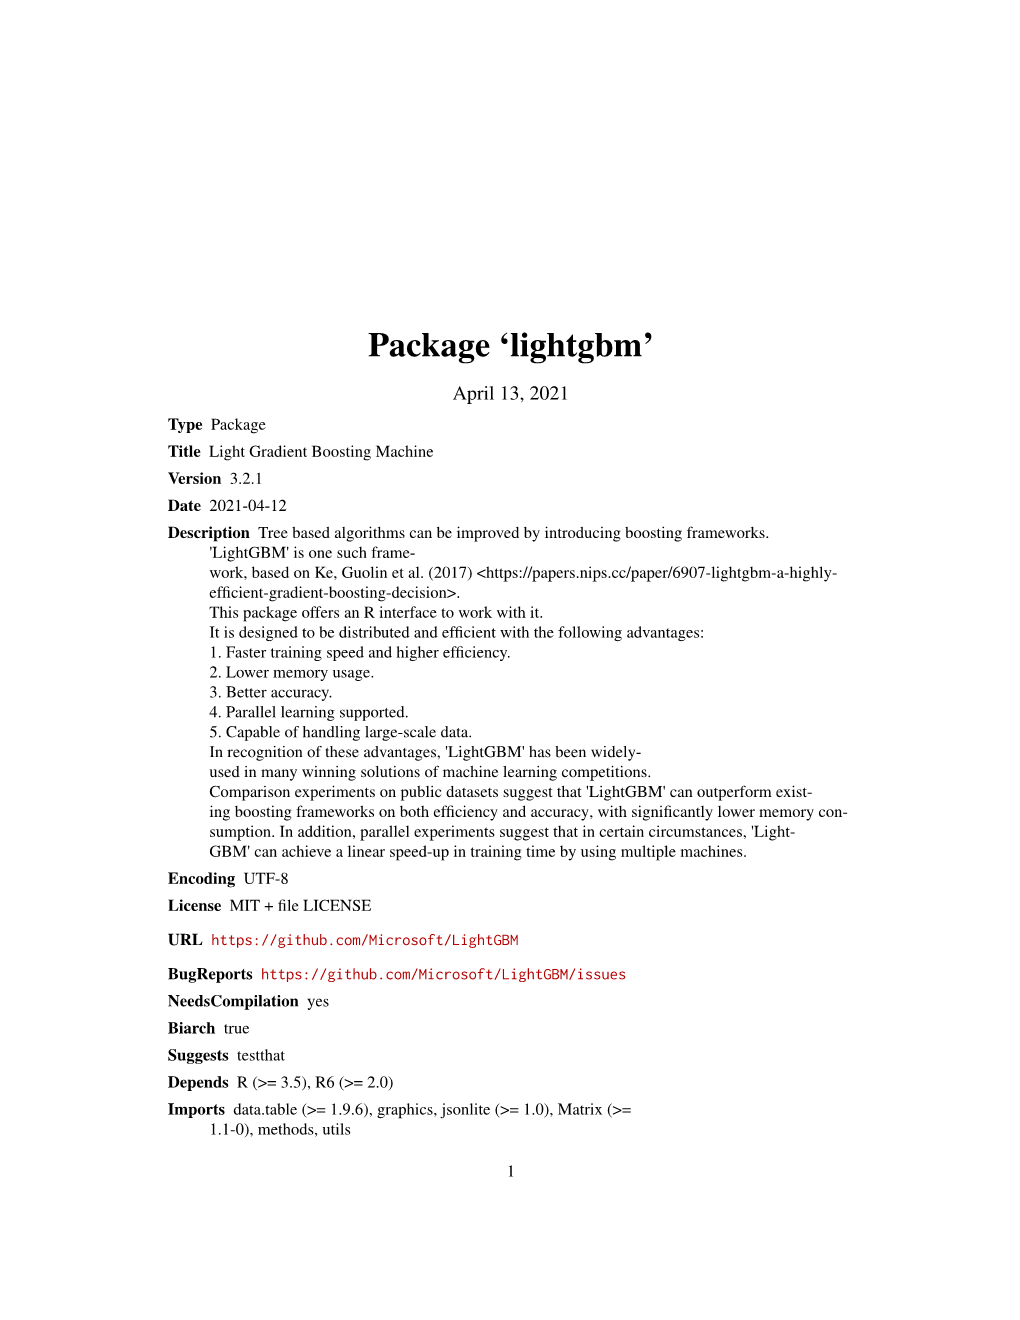 Package 'Lightgbm'